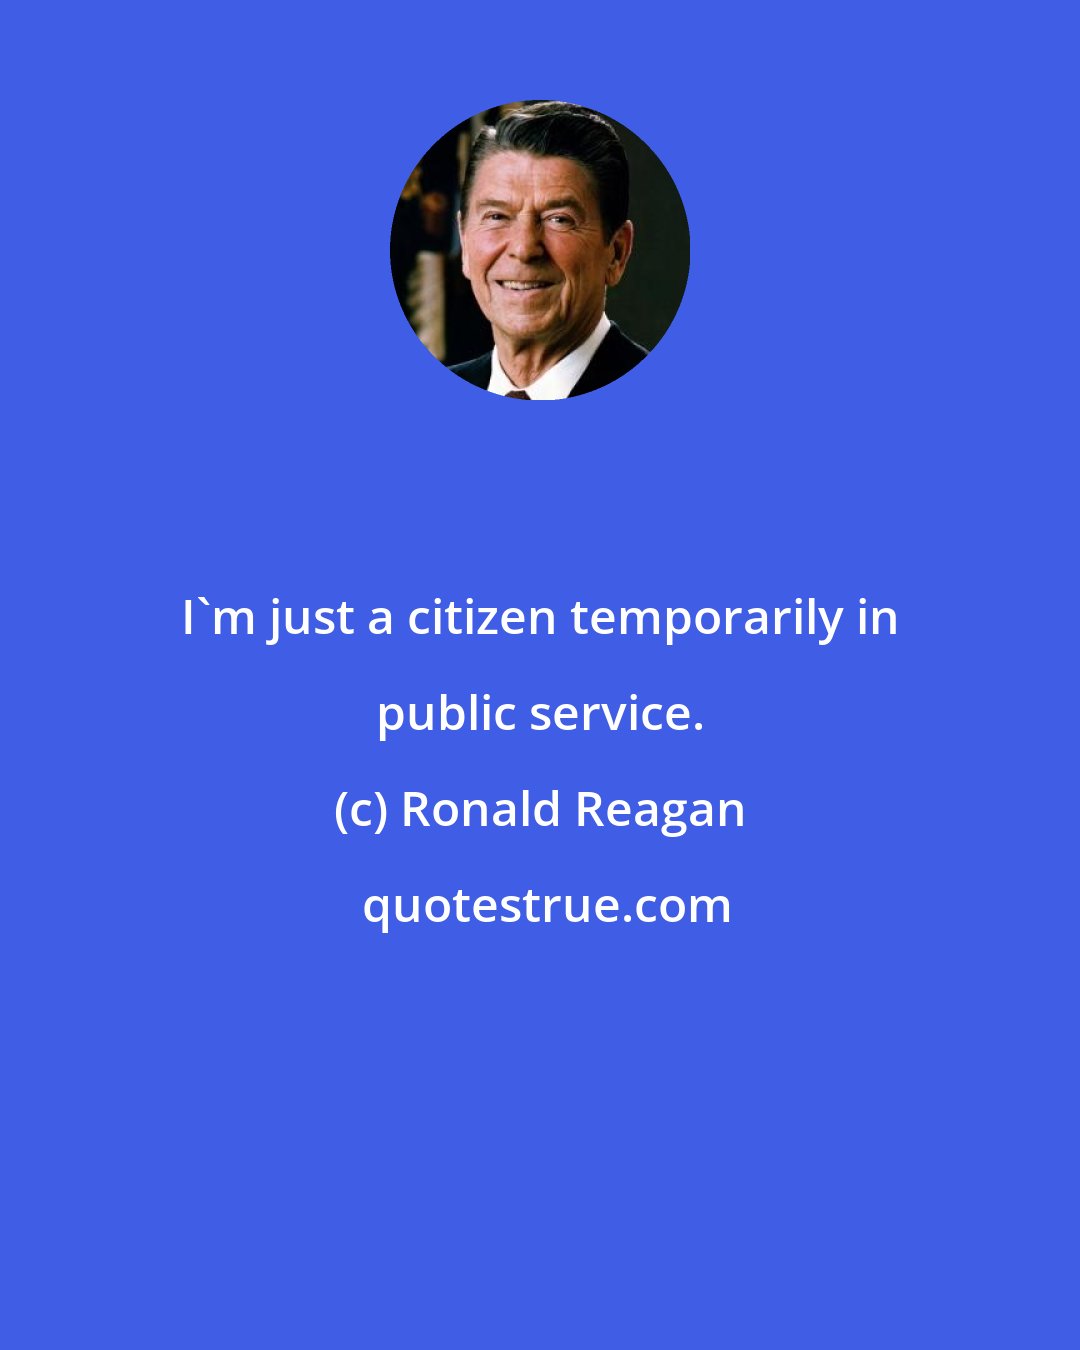 Ronald Reagan: I'm just a citizen temporarily in public service.